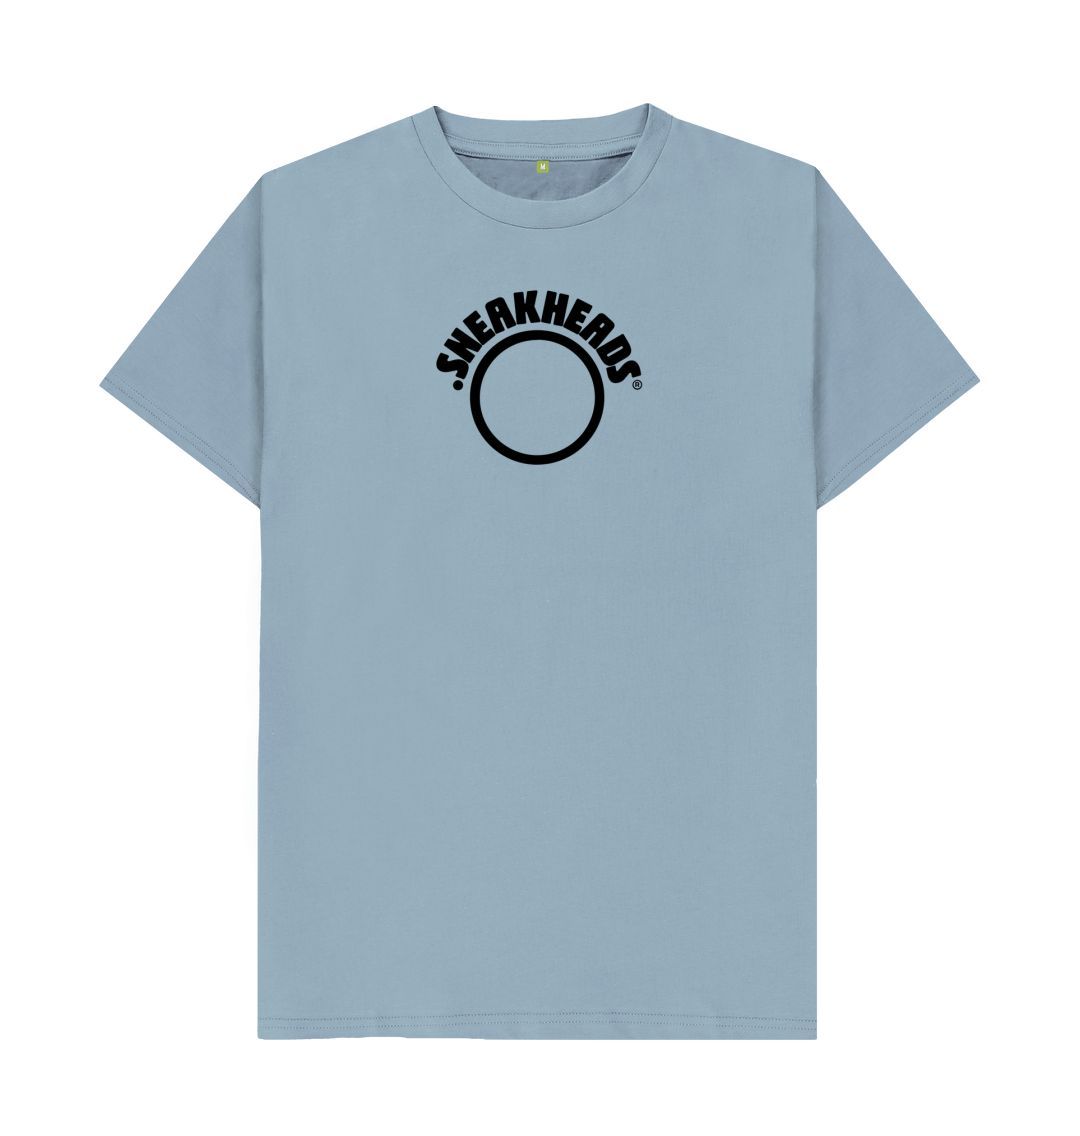 Stone Blue SneakHeads\u00ae Teemill t-shirt \u2013 large black logo